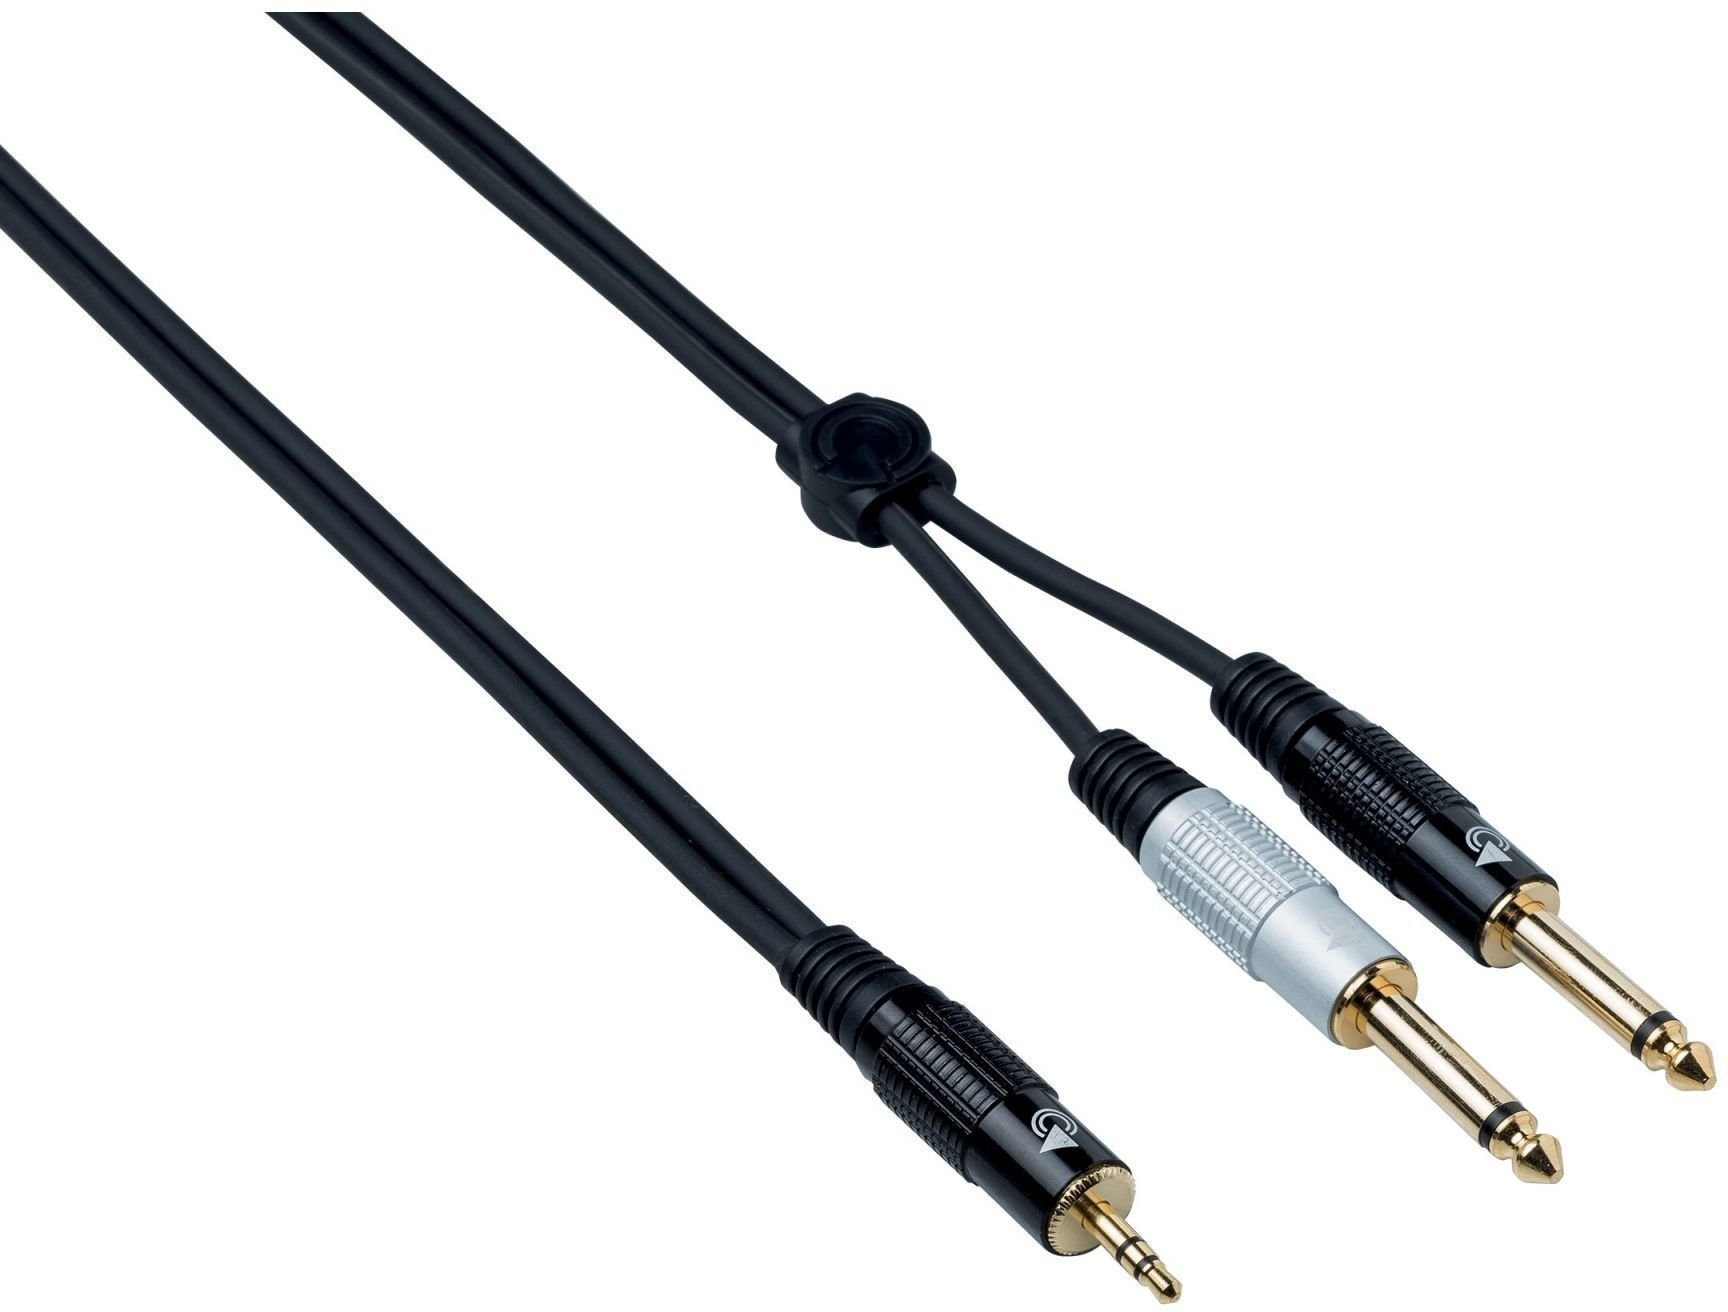 Bespeco EAYMSJ300 3 m Cablu Audio